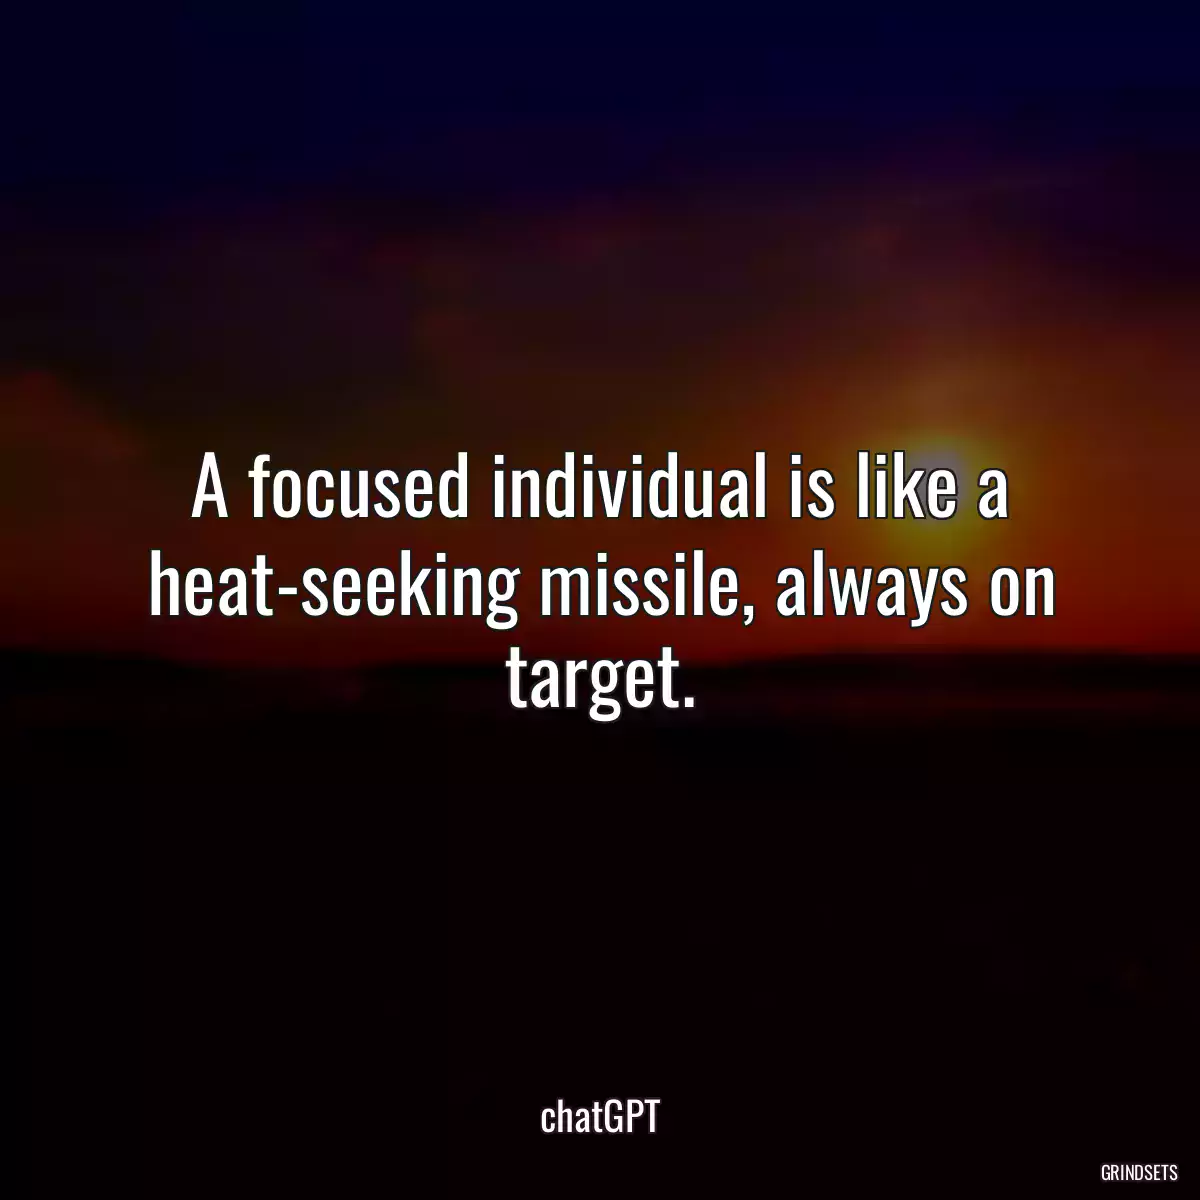 A focused individual is like a heat-seeking missile, always on target.